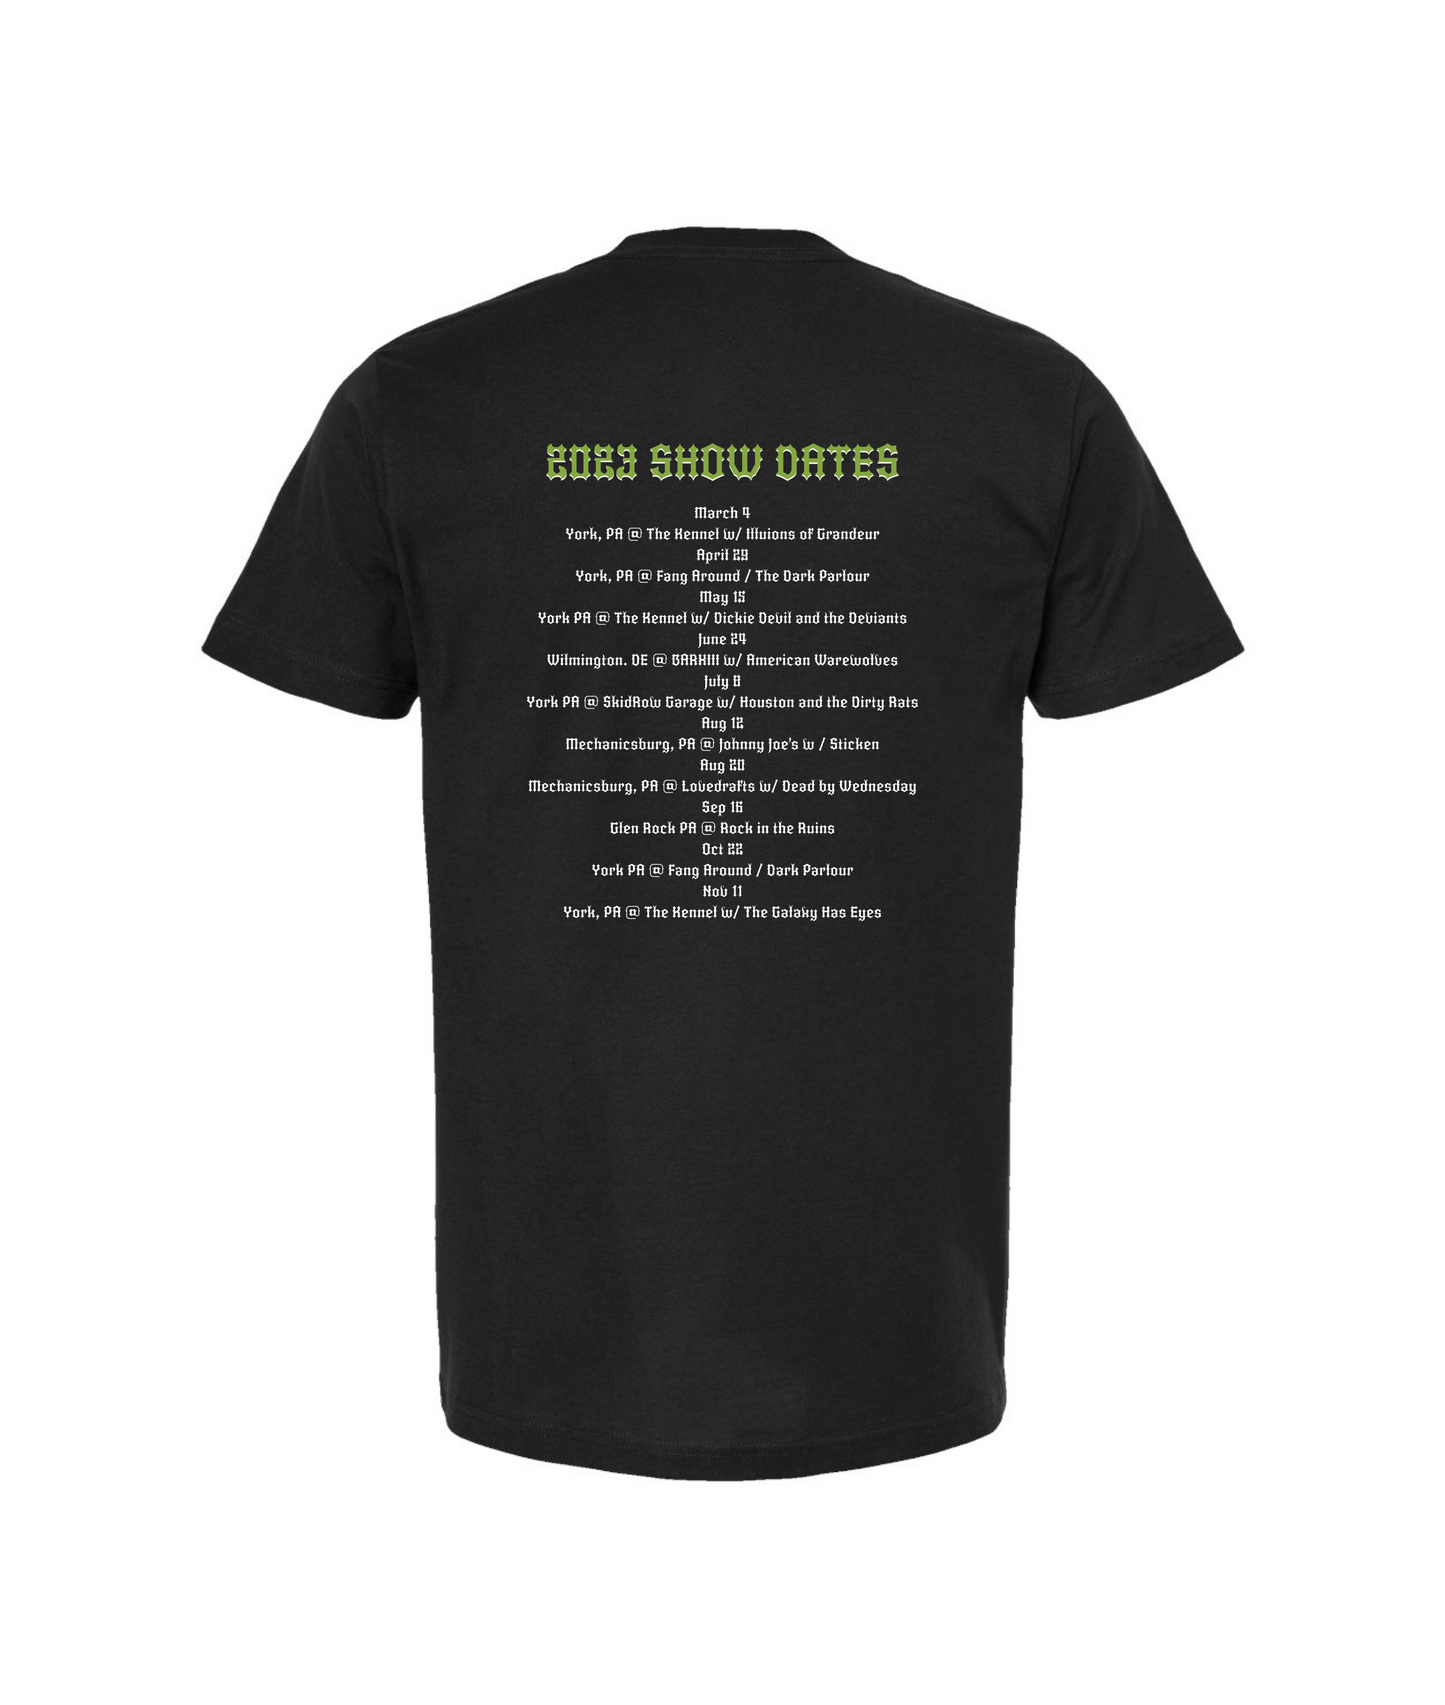 Seglock - 2023 SHOW DATES - Black T-Shirt